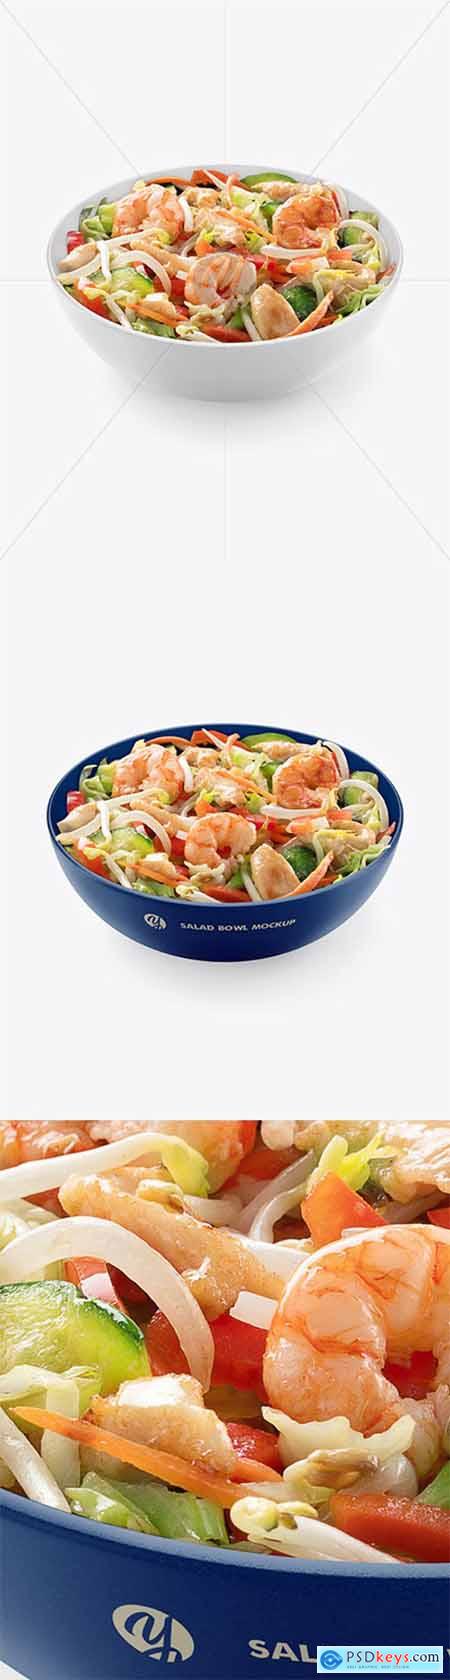 Salad w- Shrimps in a Bowl Mockup 60725